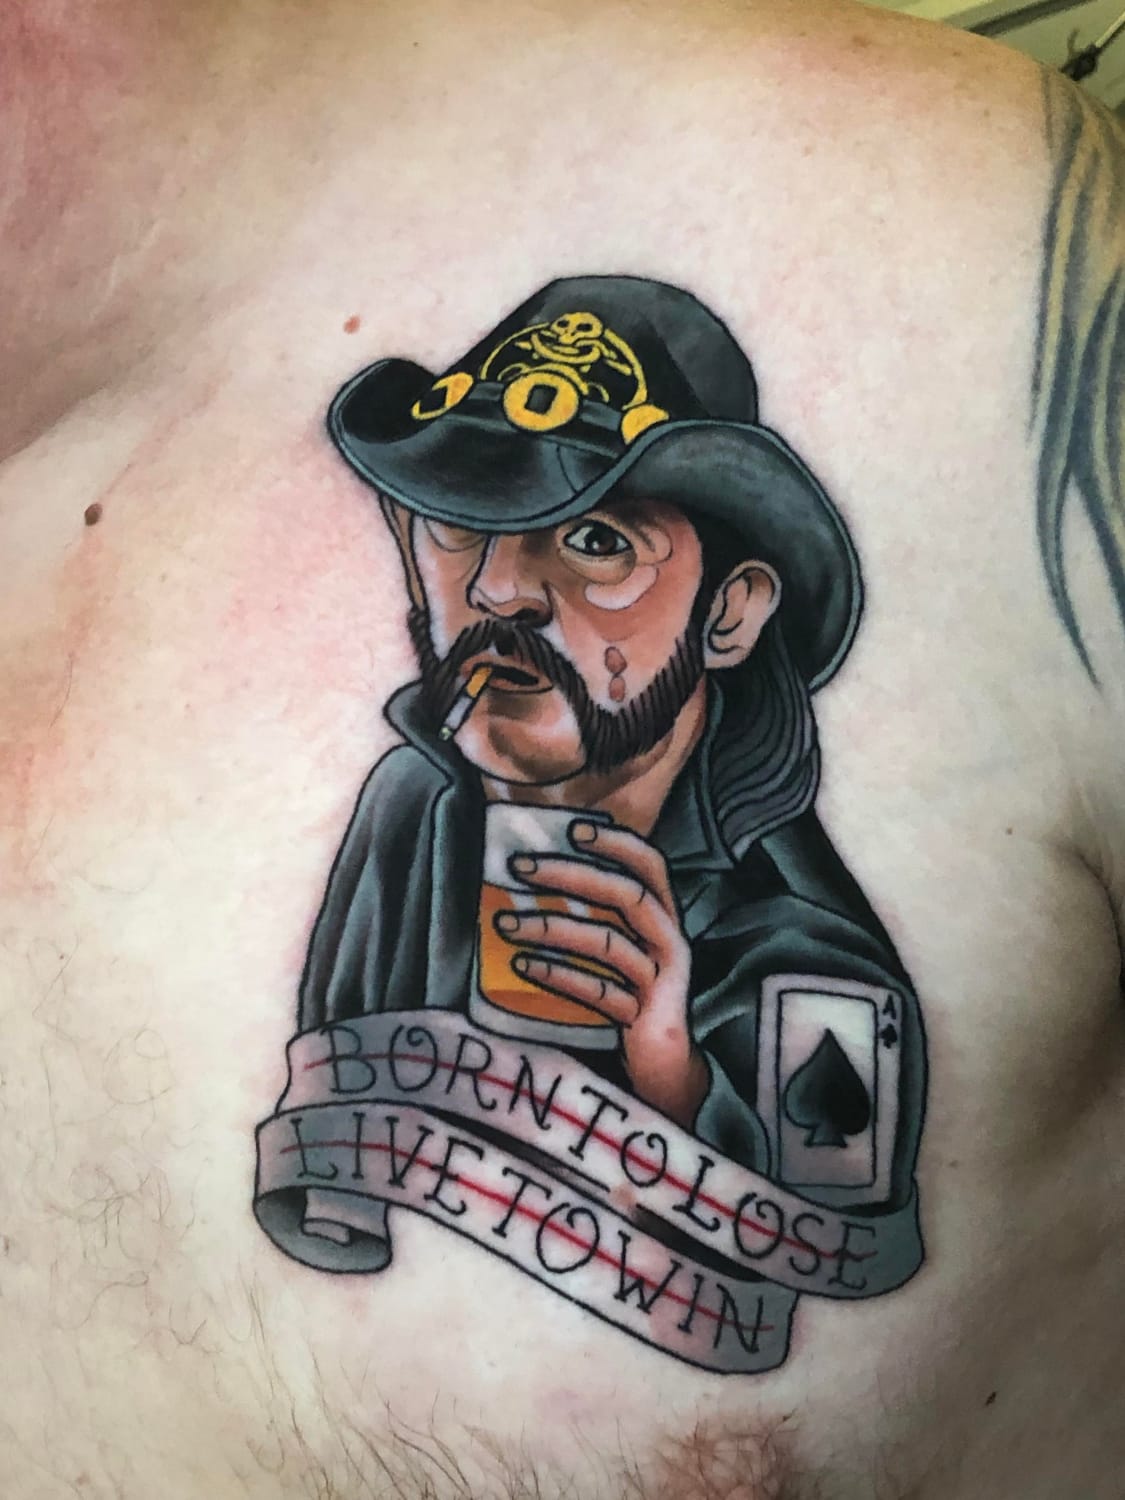 Lemmy done at bright side tattoo Copenhagen by kest234